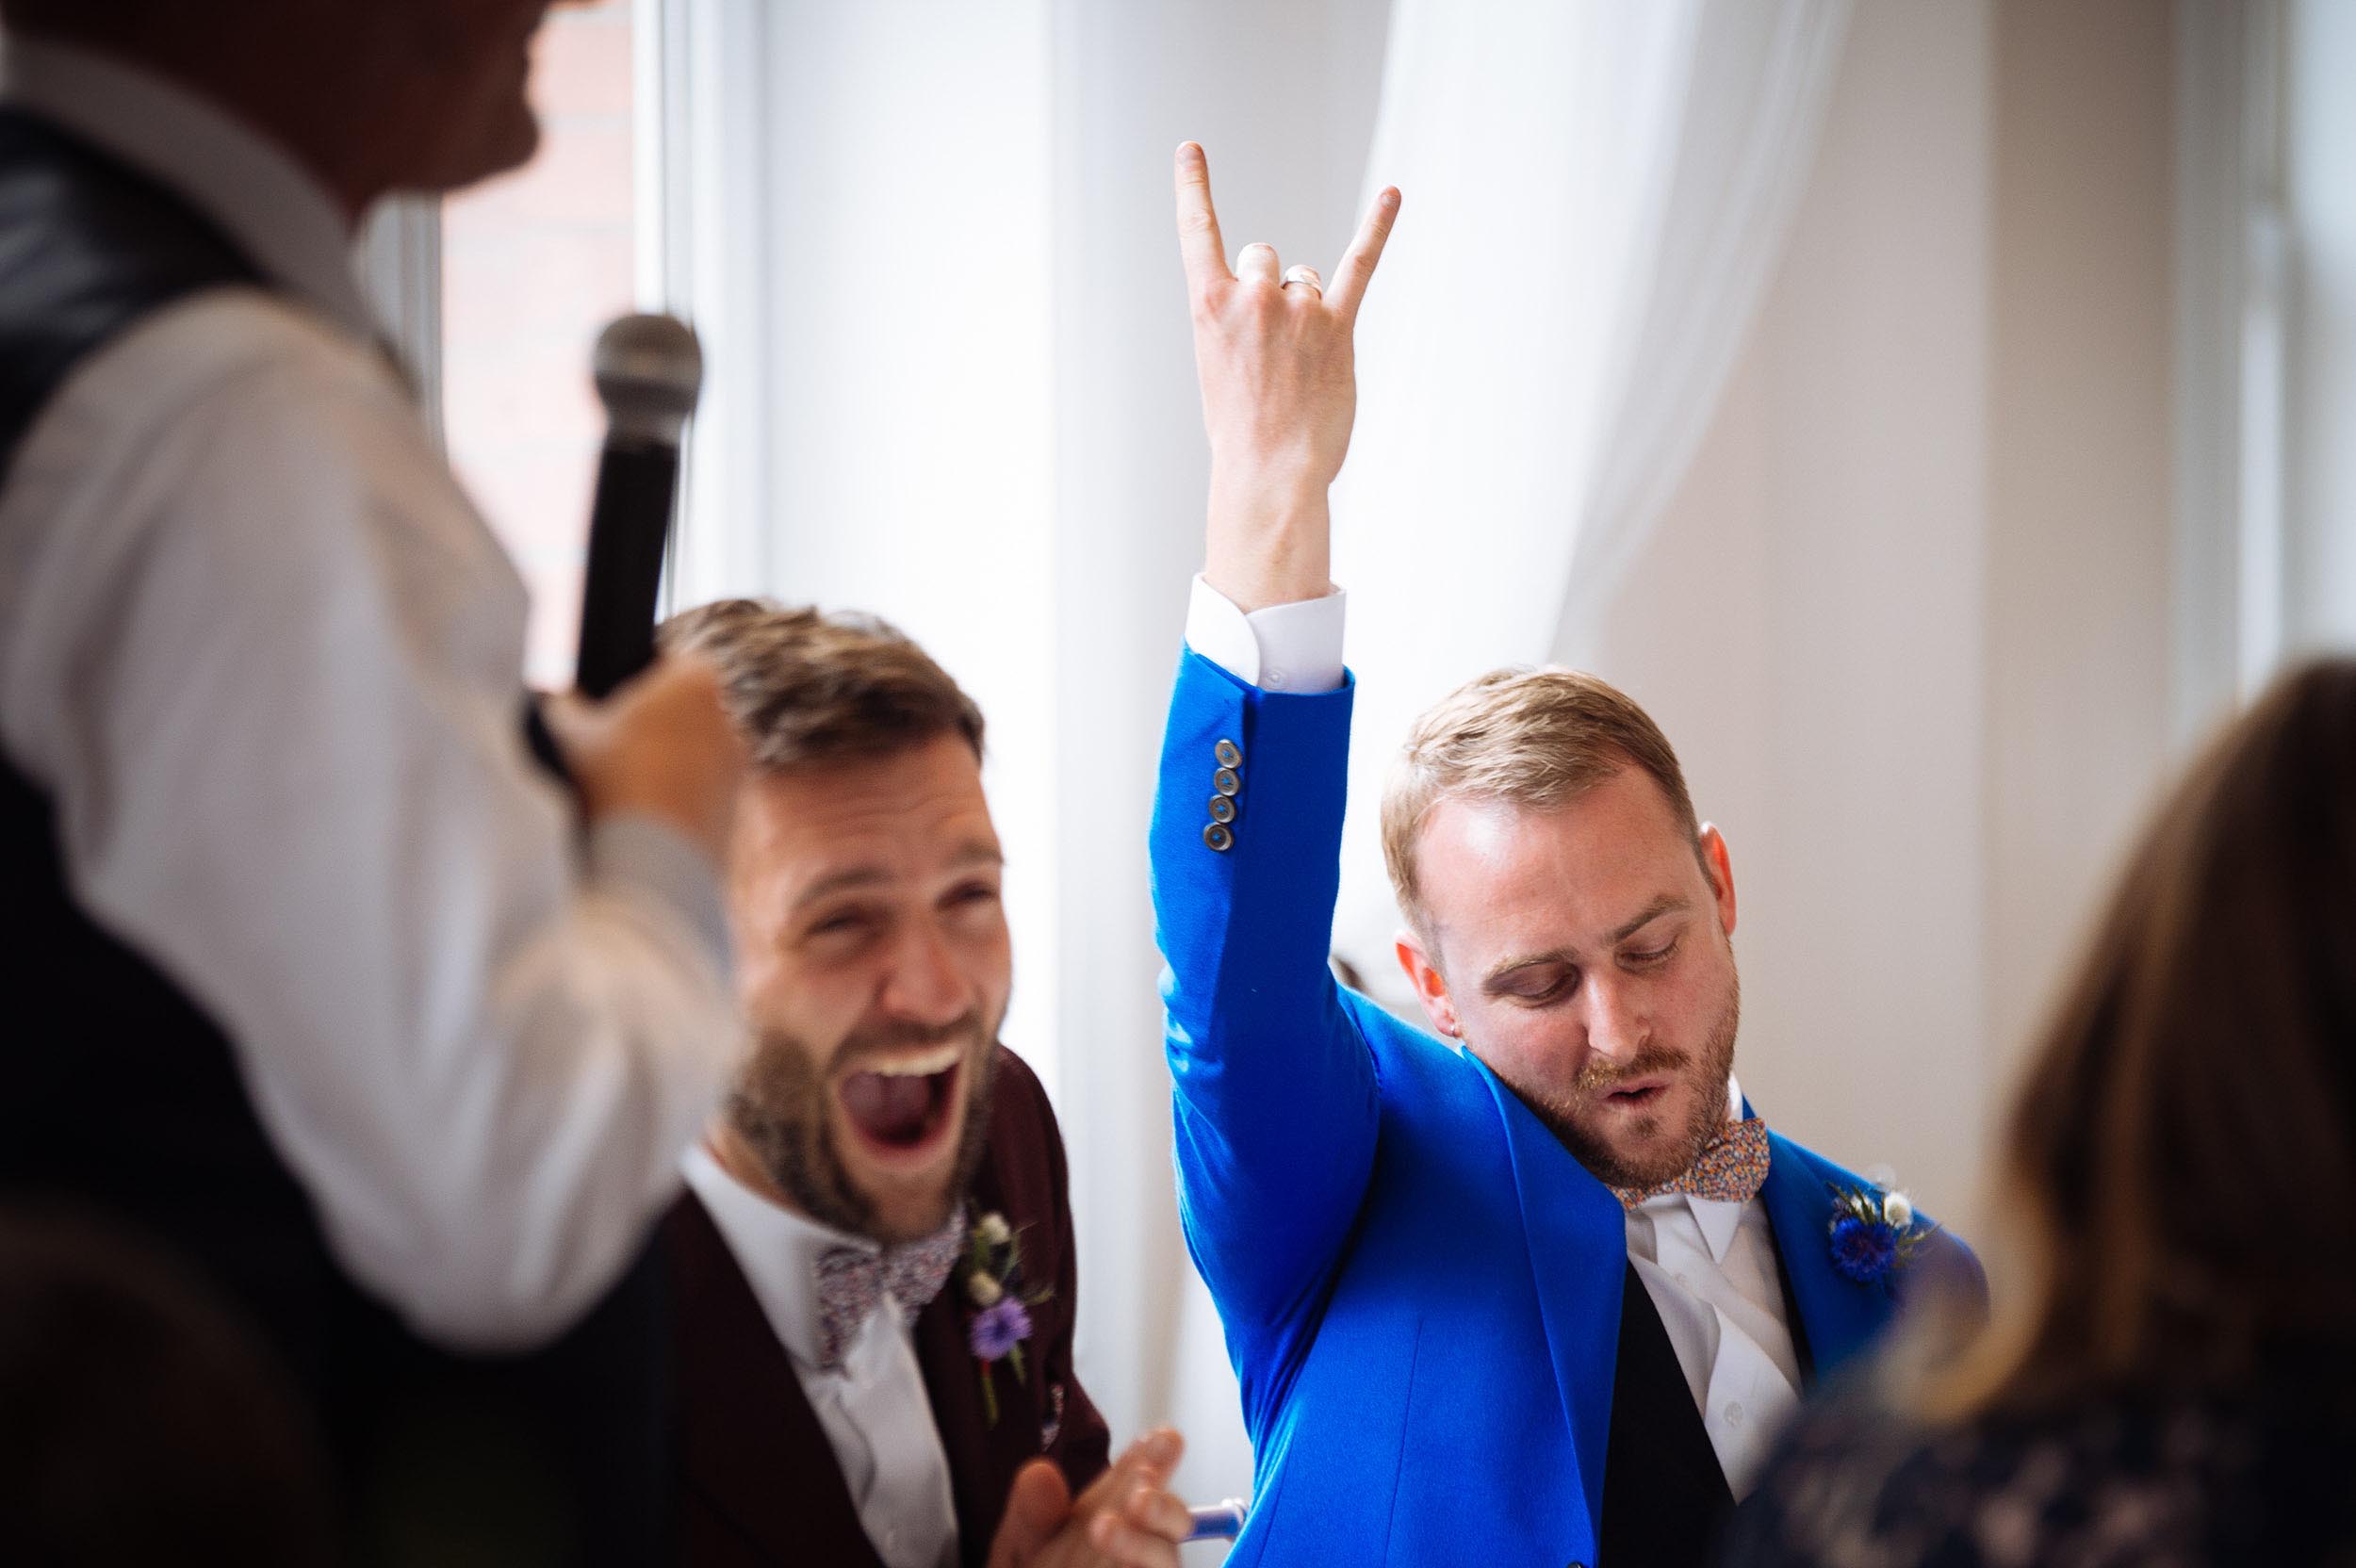 gay-wedding-speeches-meal-fallon-byrne-restaurant-dublin-ireland-24